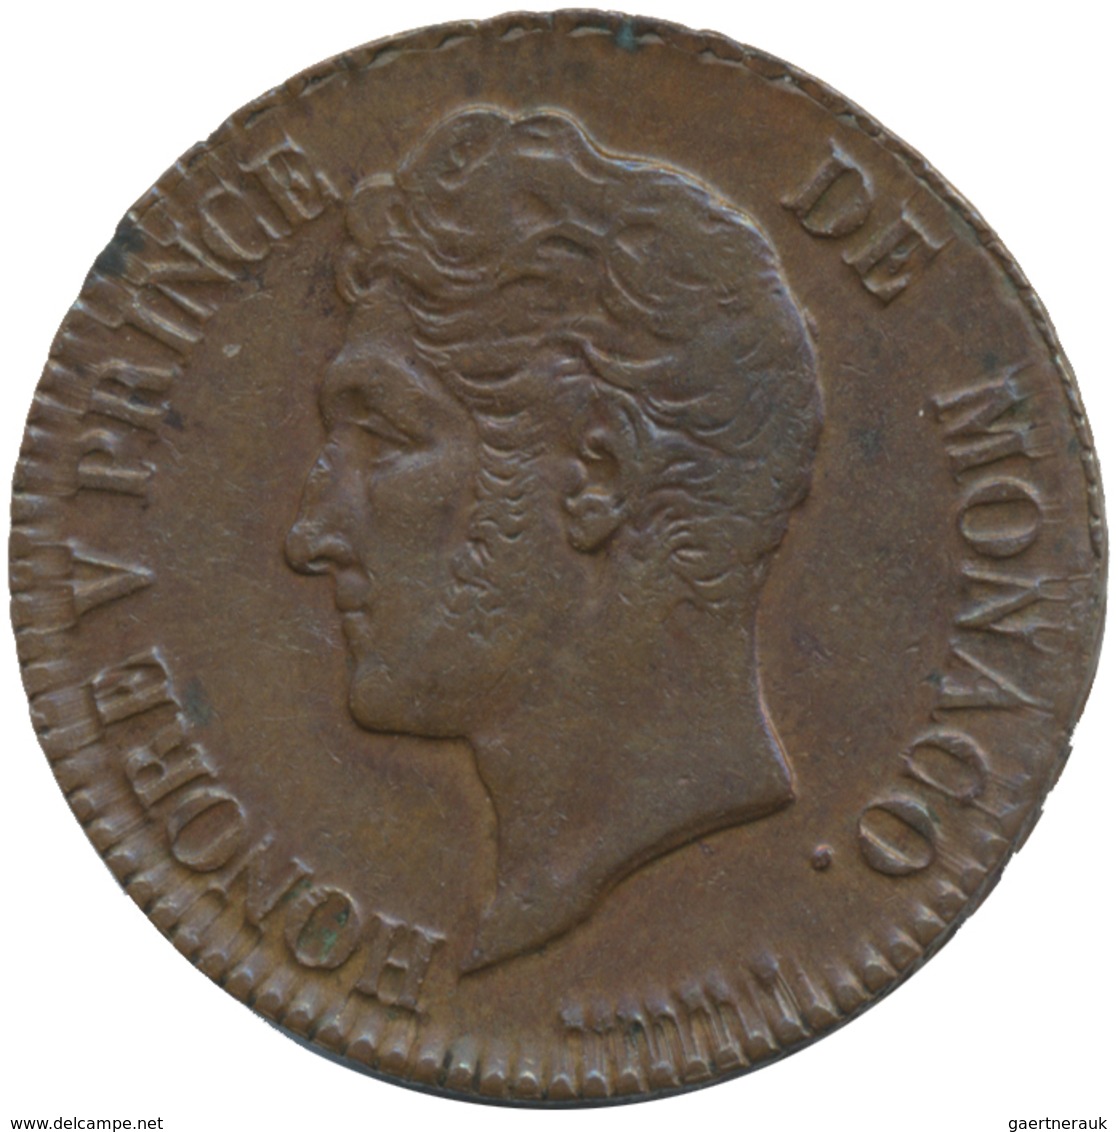 Monaco: Honoré V. 1819-1841: Lot 5 Stück; 2 x Un Décime 1838 und 3 x 5 Centimes 1837, schön-sehr sch